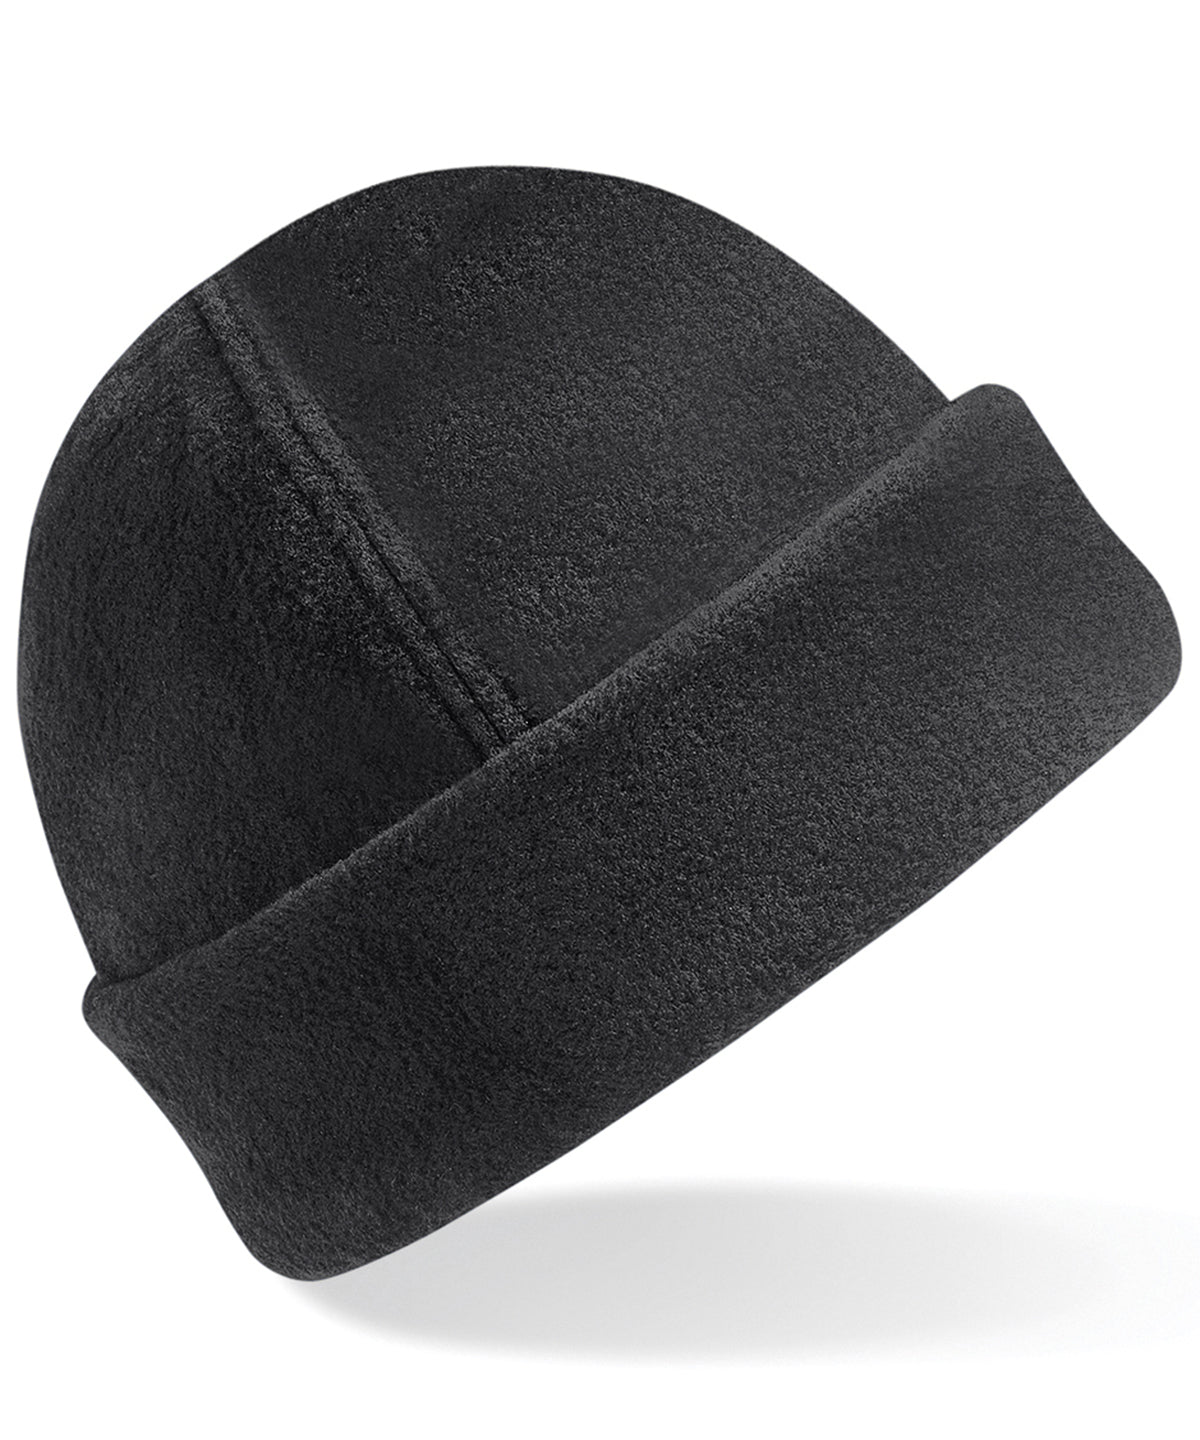 Personalised Hats - Black Beechfield Suprafleece® ski hat